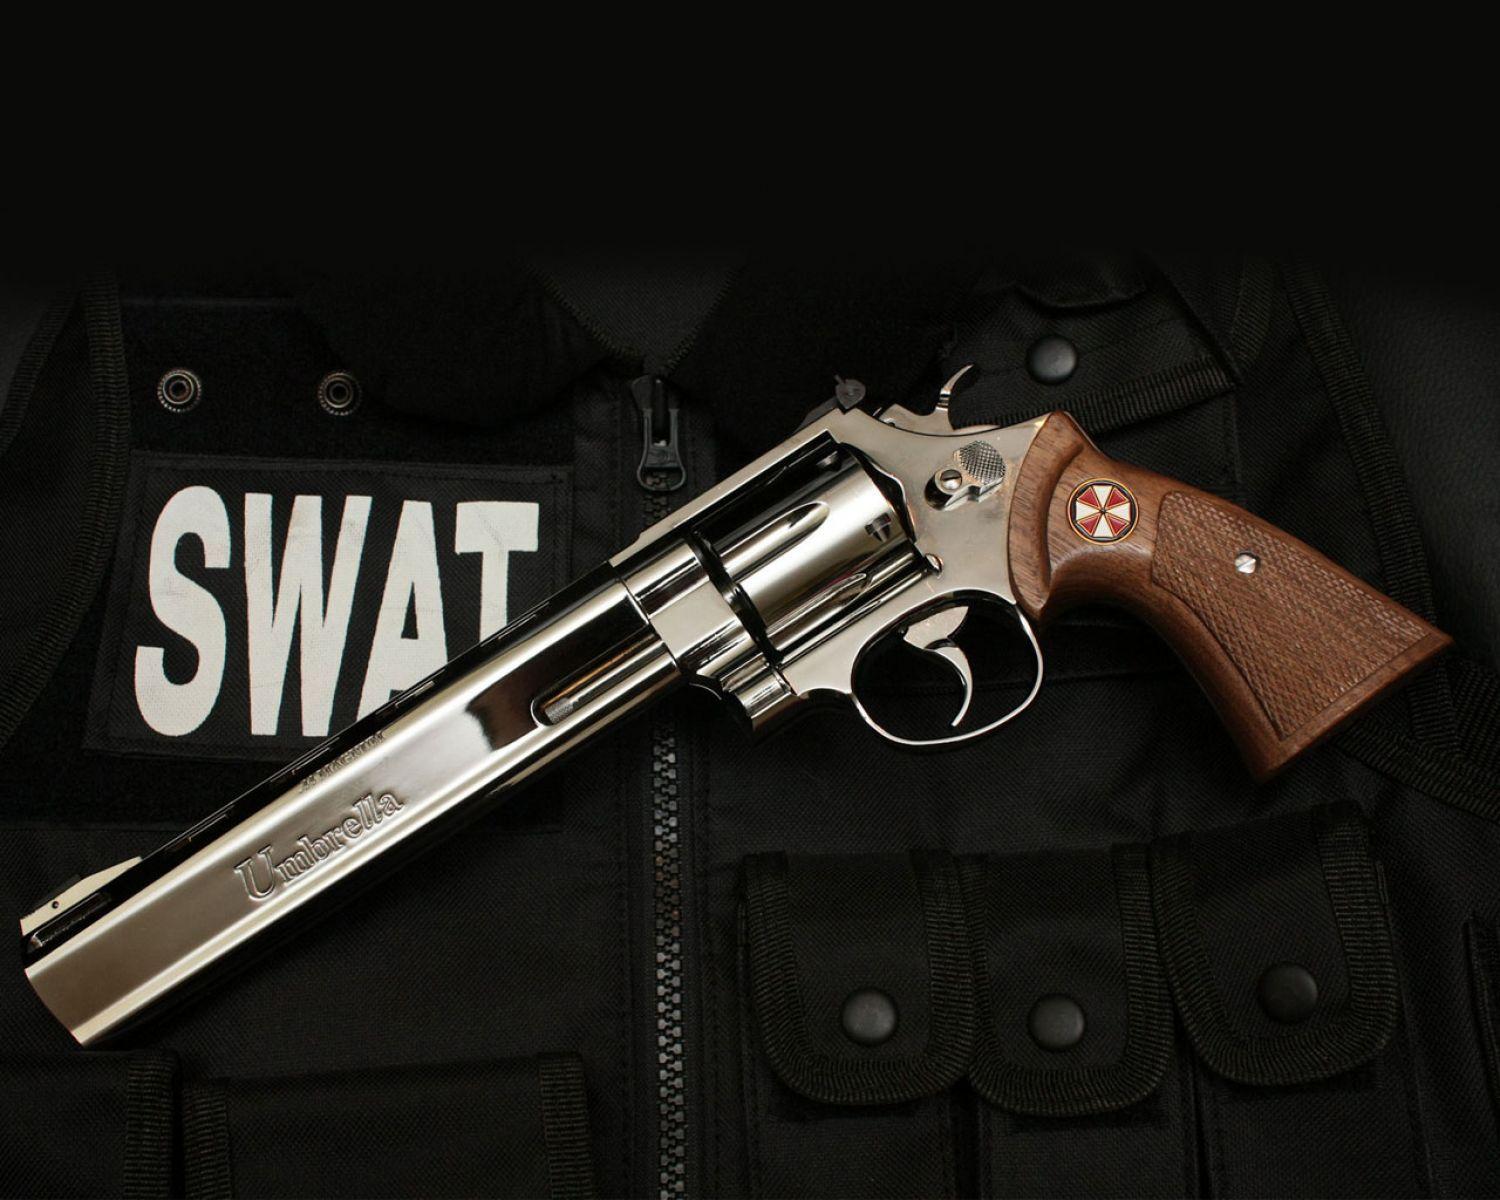 Gun With Bullet Proof Jacket. HD Guns Wallpaper for Mobile and Desktop